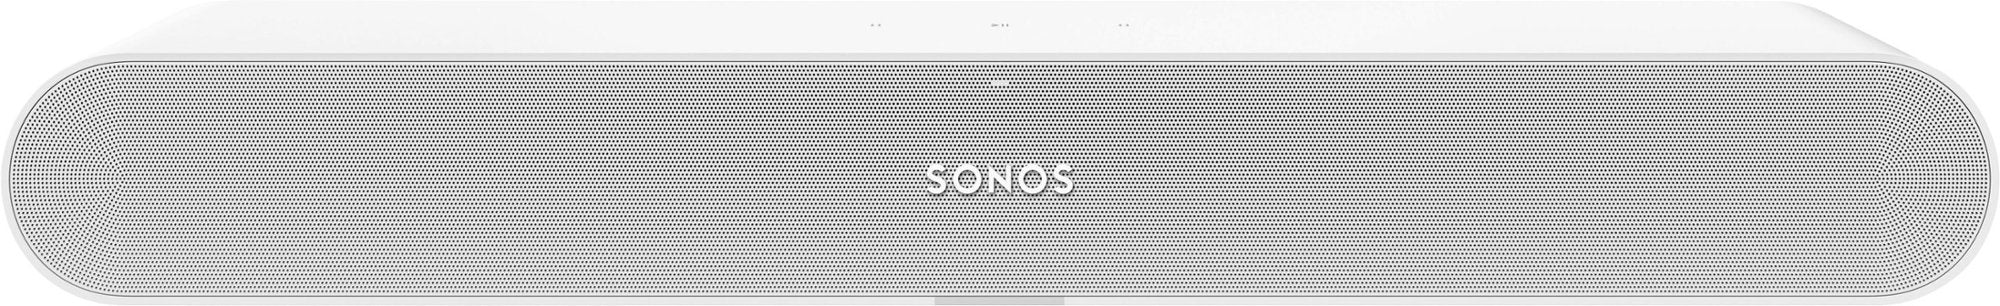 Sonos Ray Soundbar with Wi-Fi